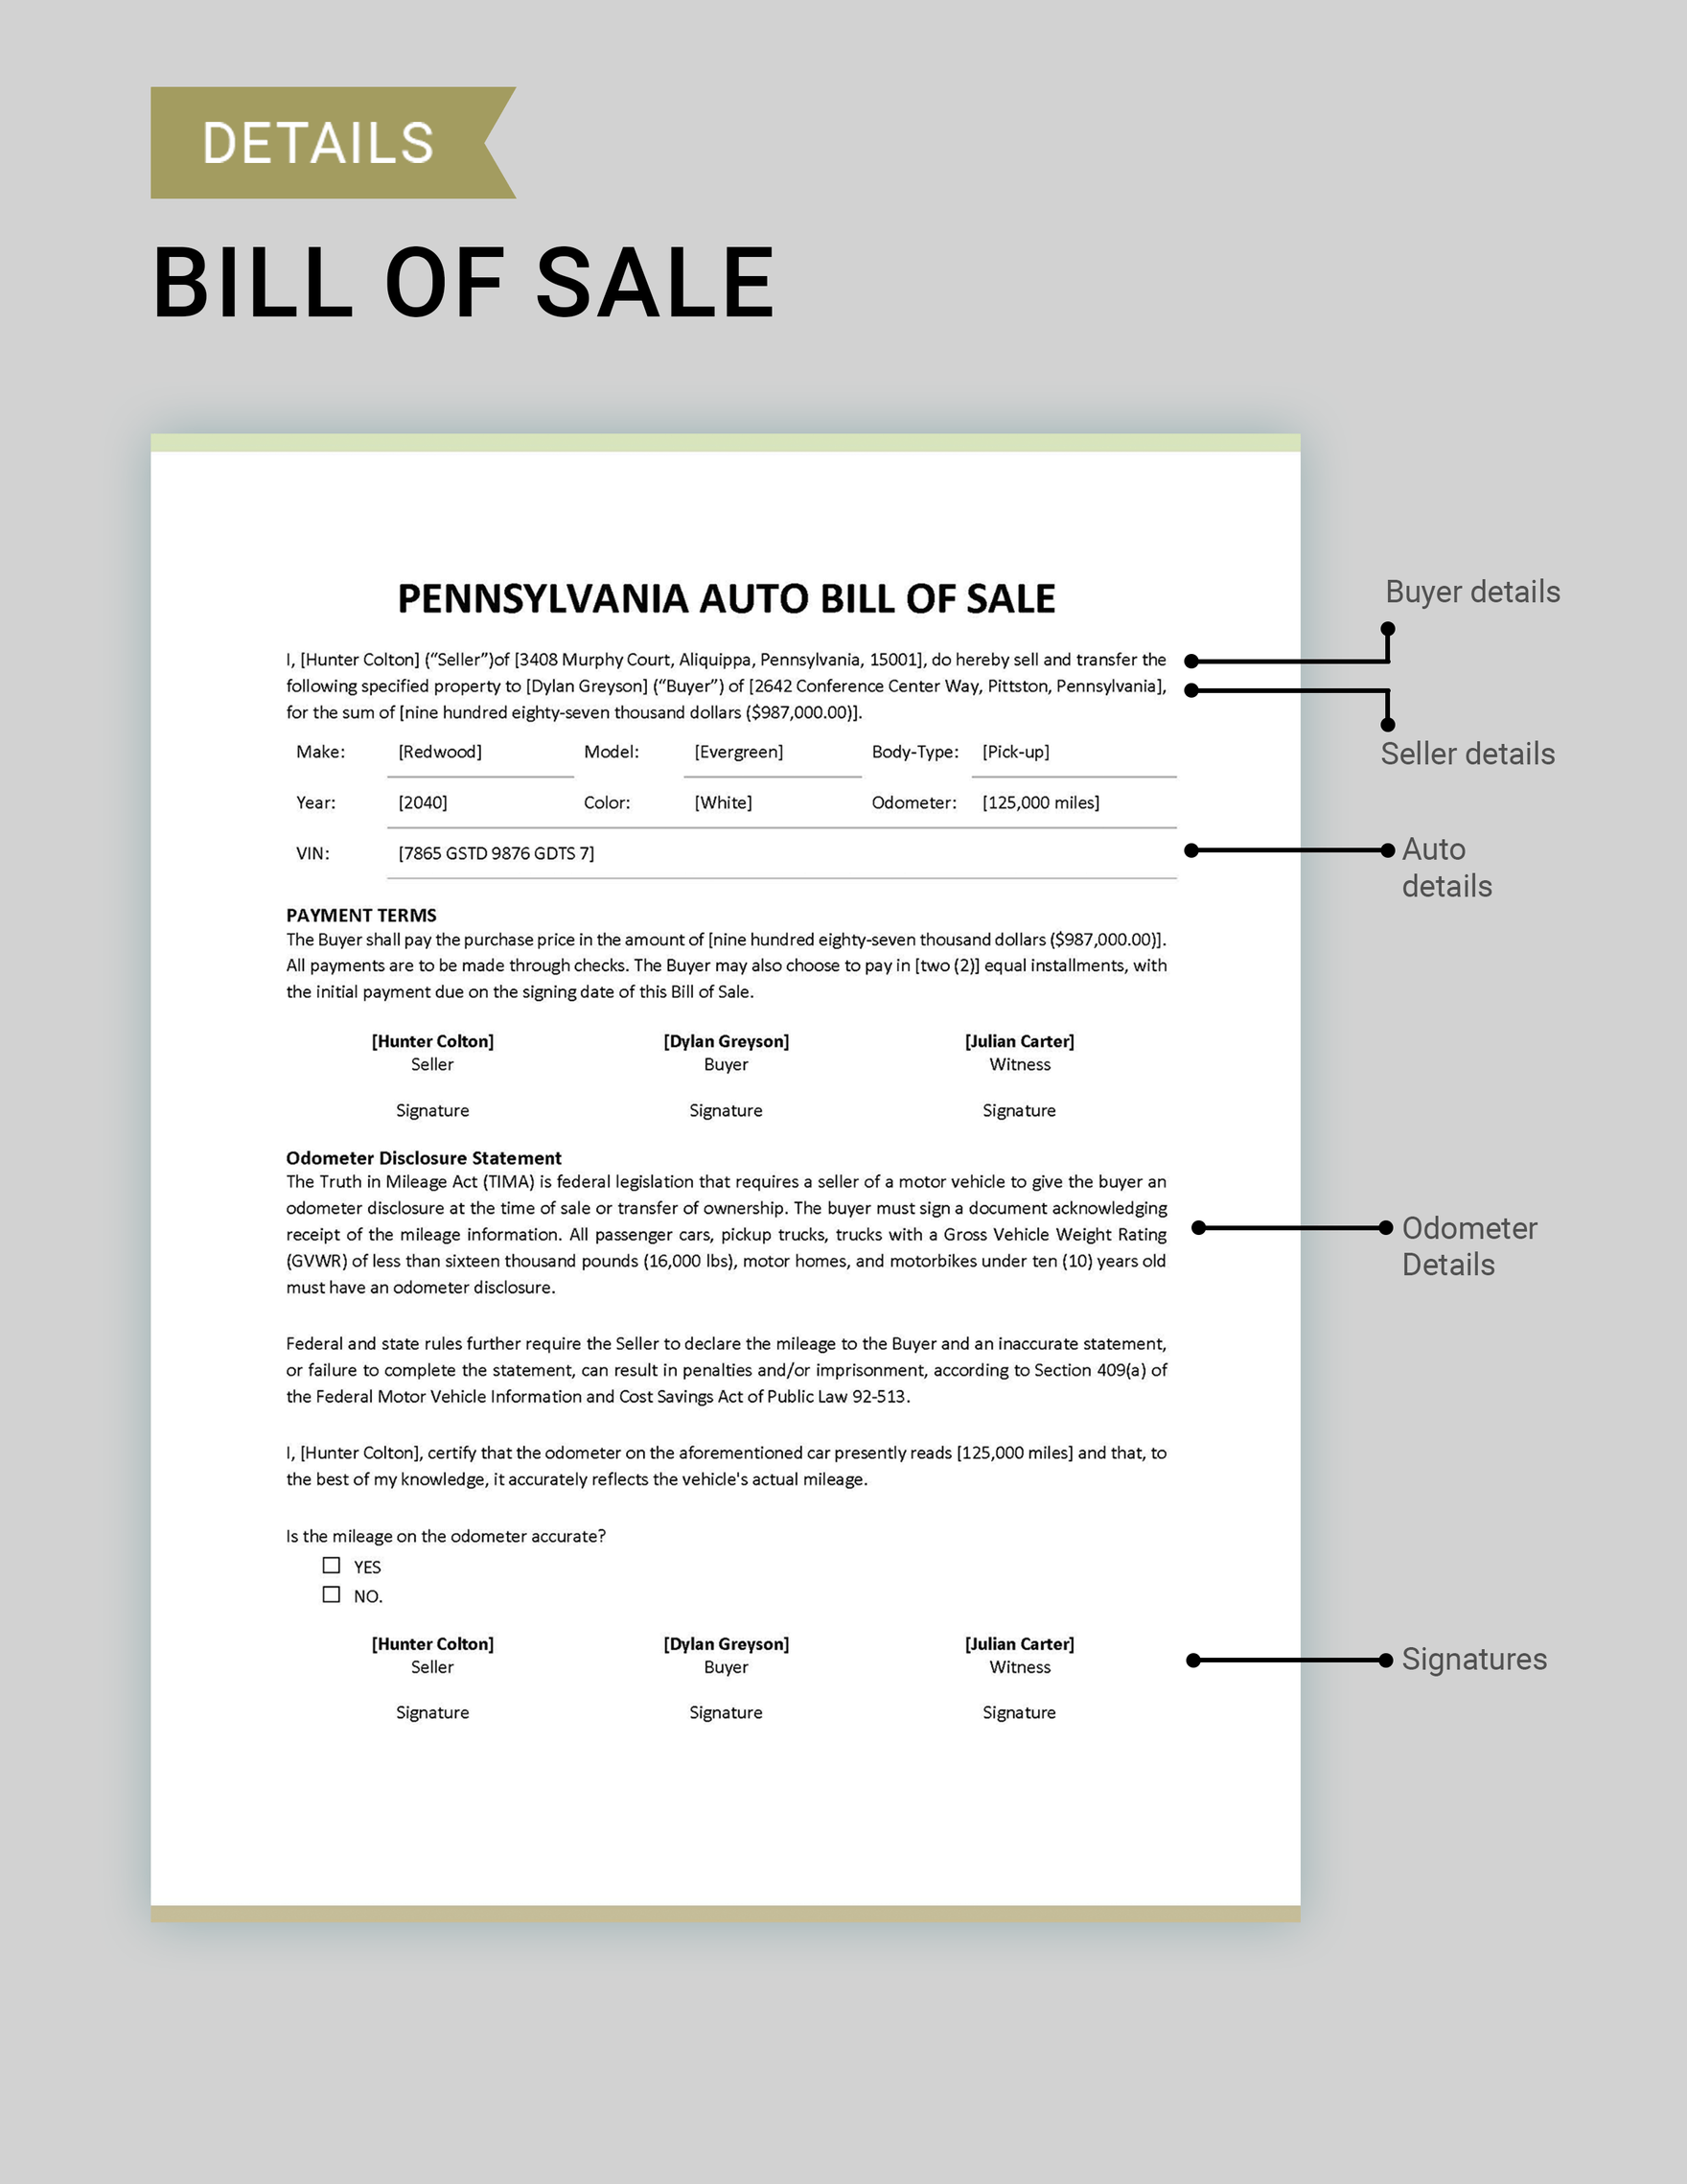 Pennsylvania Auto Bill of Sale Template